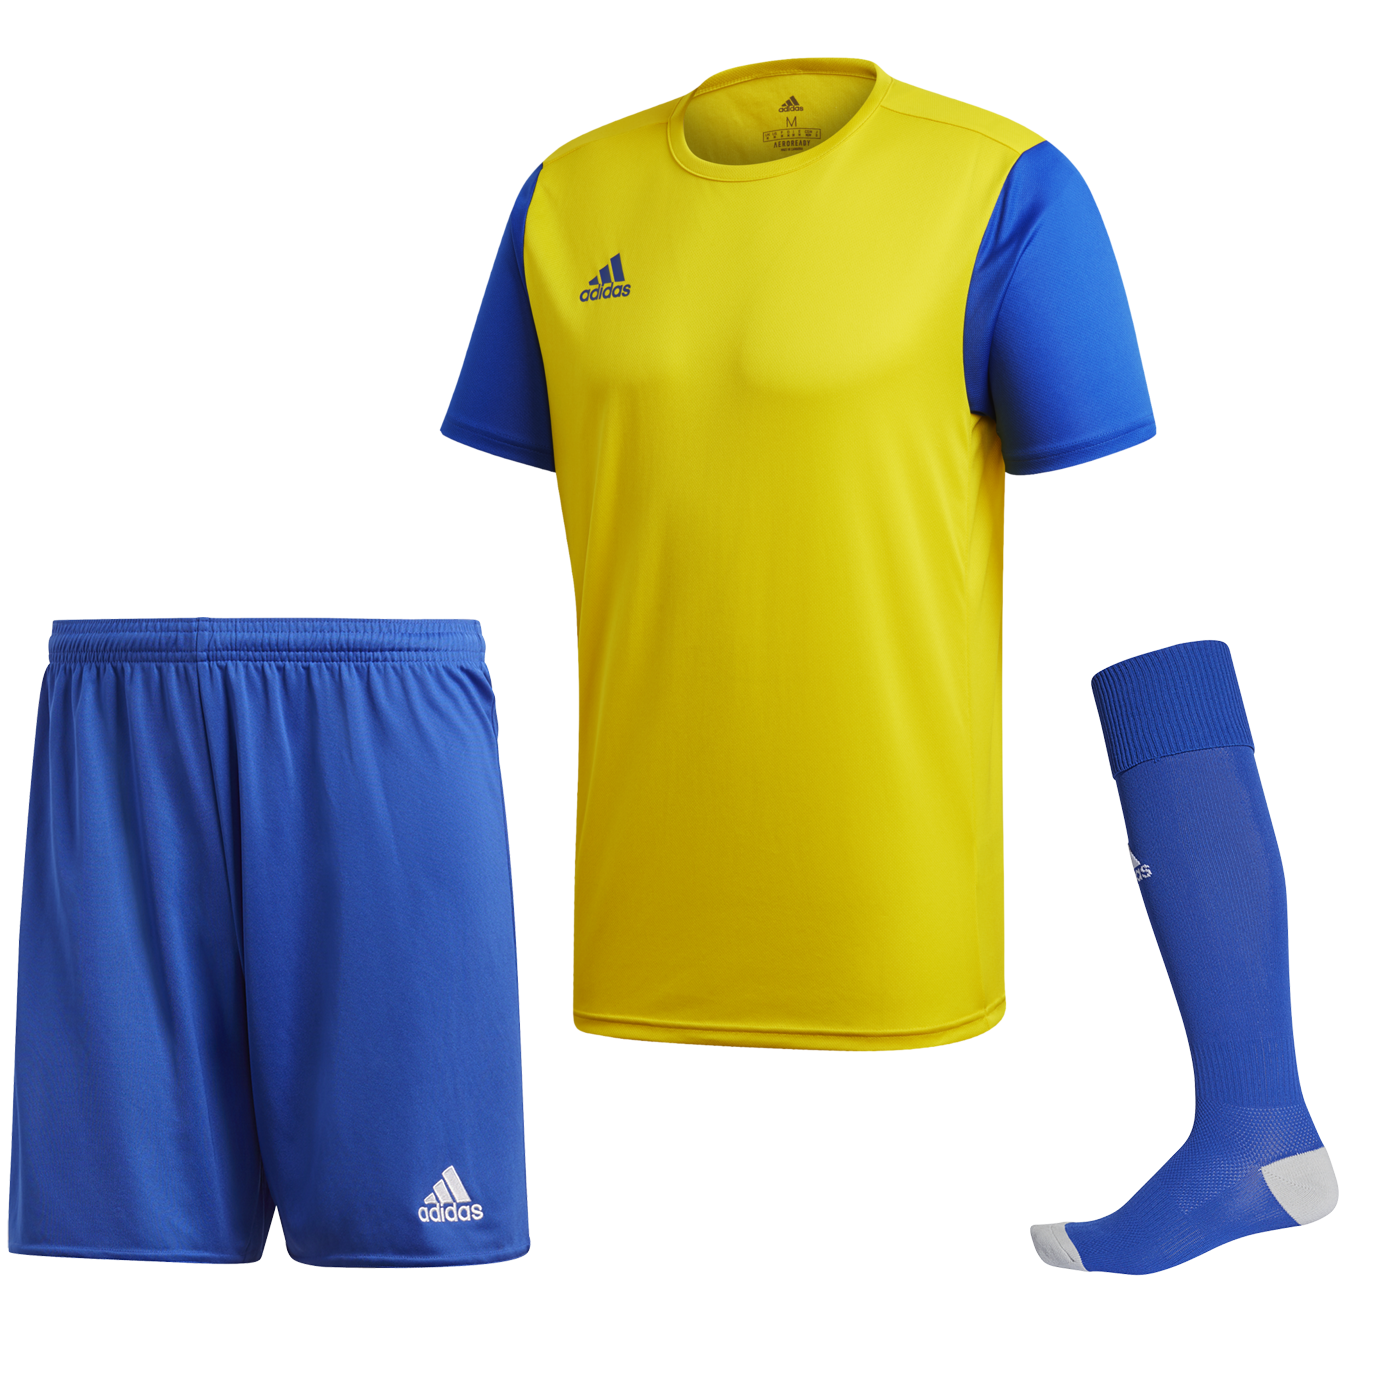 Adidas Estro 19 žlutá/modrá UK Junior S Dětské